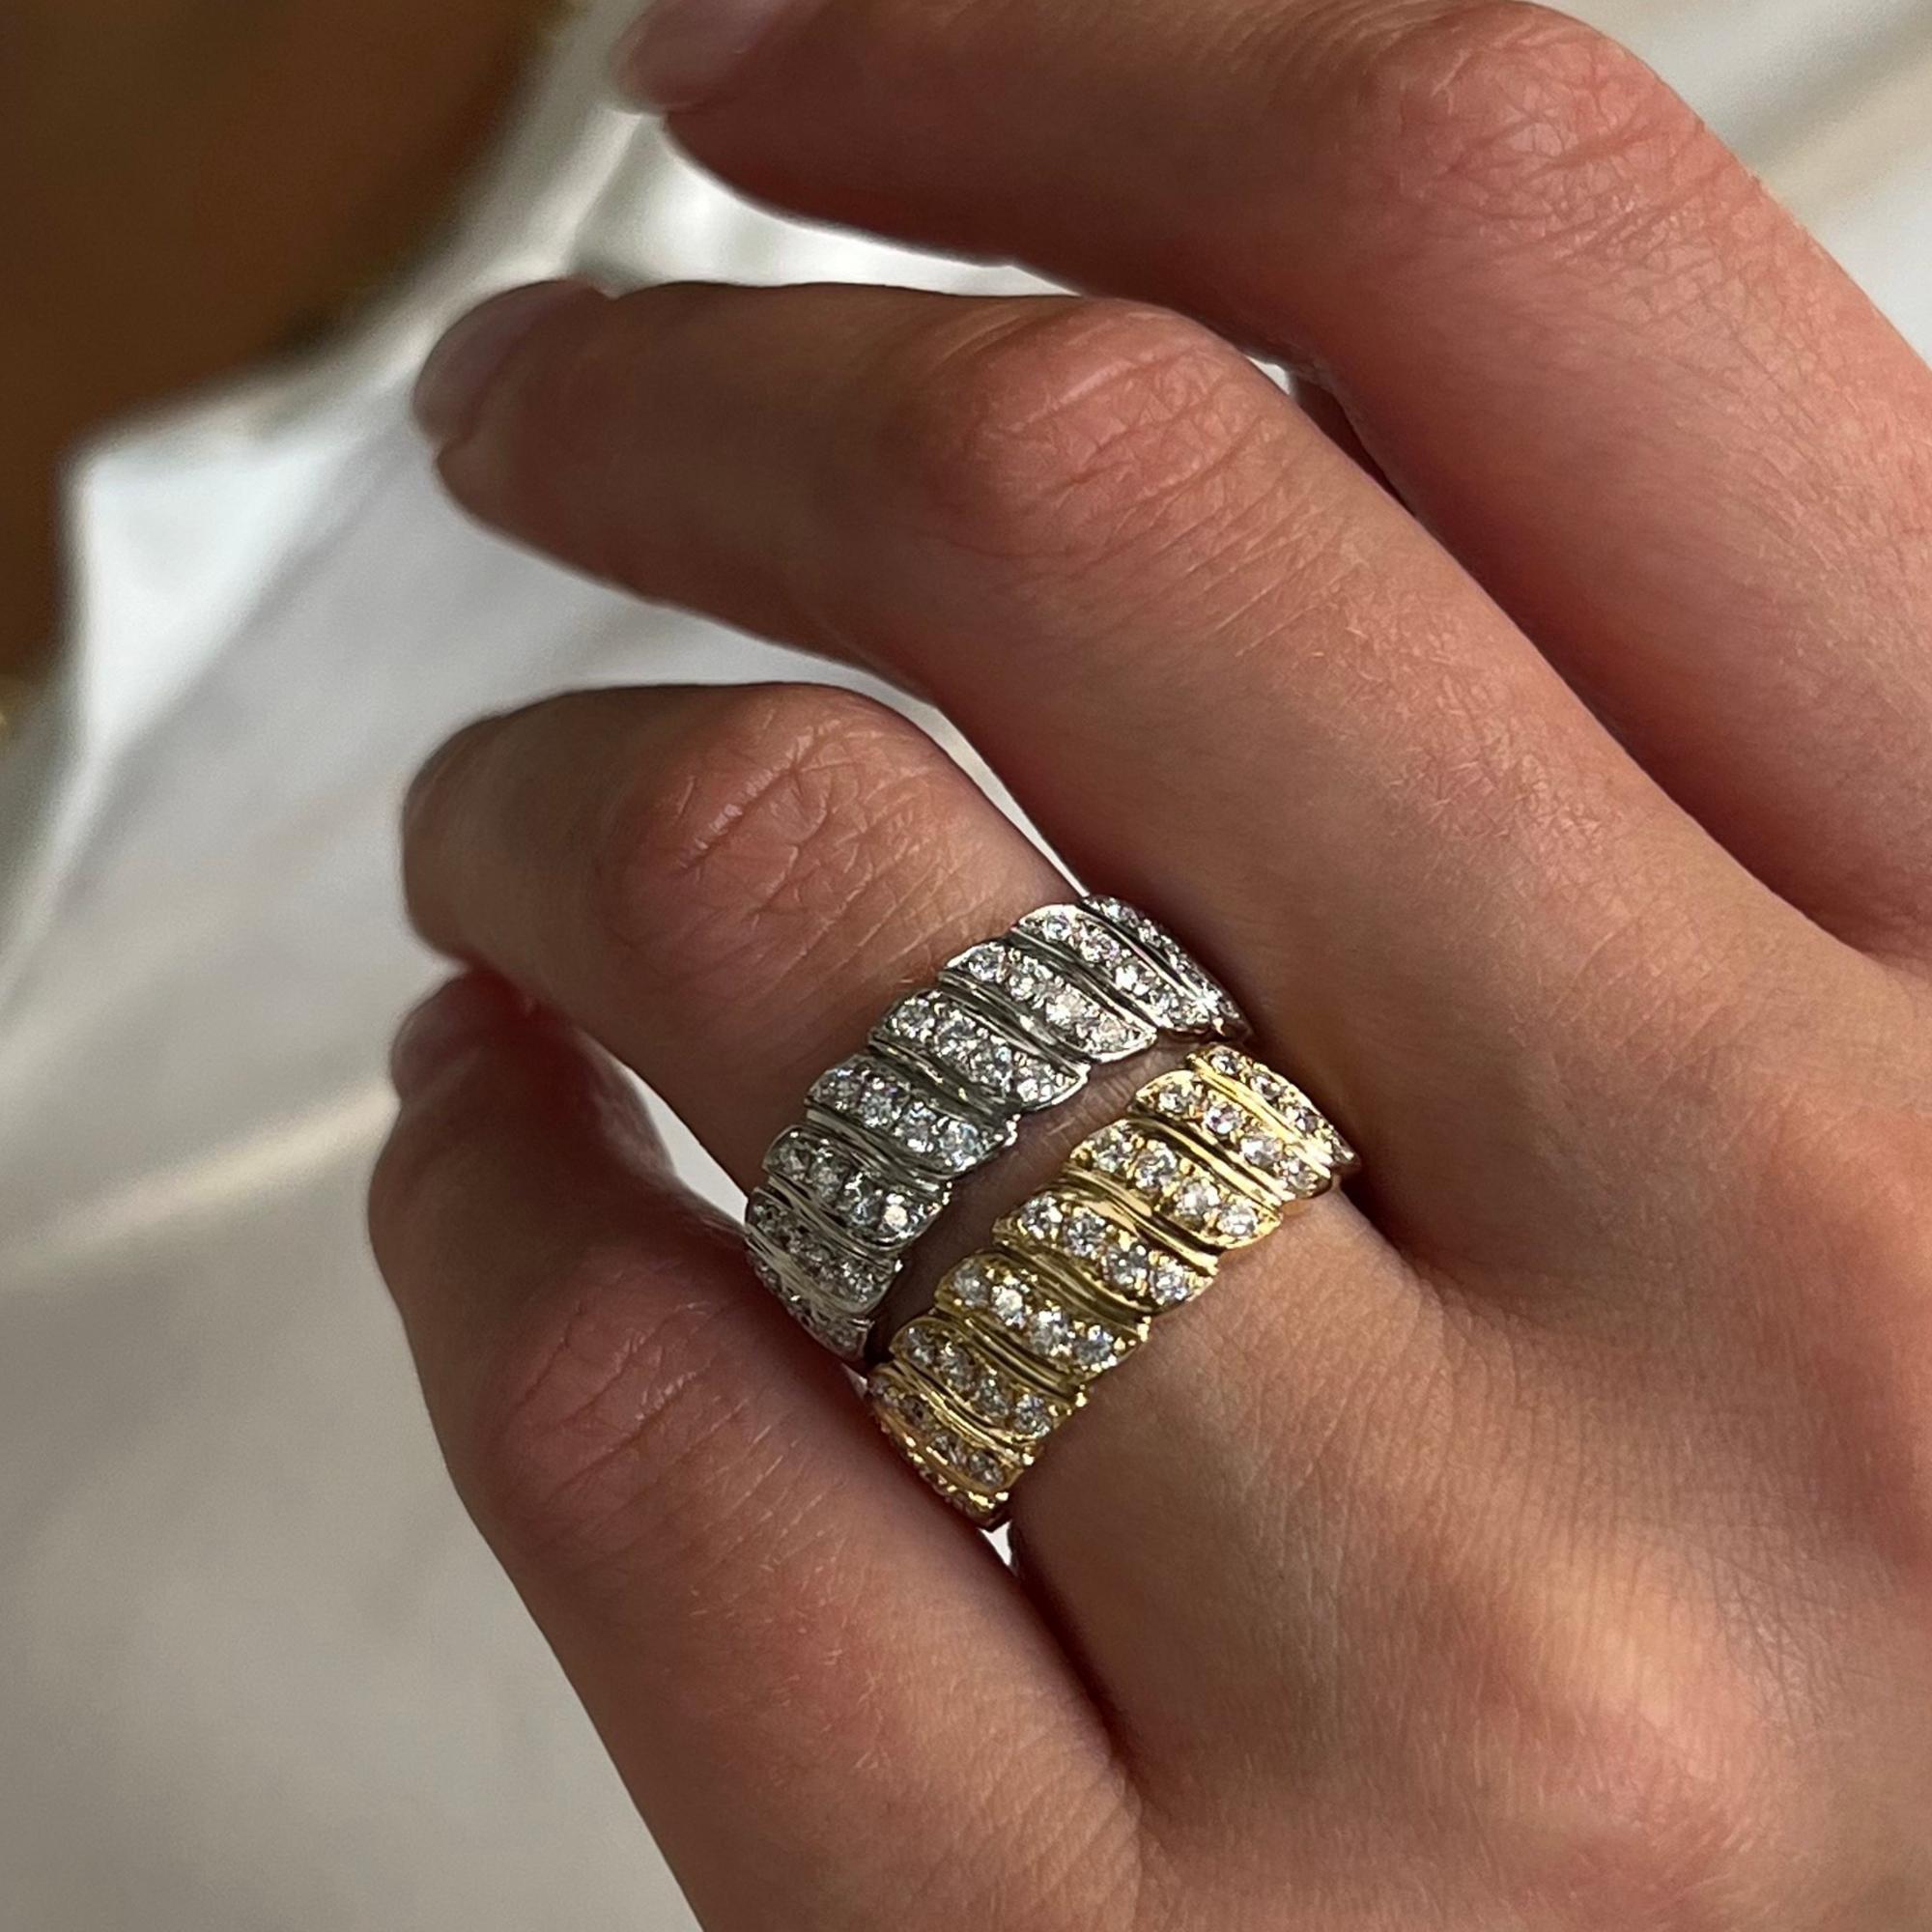 Rachel Koen 0.52cttw Round Cut Diamond Band Ring 18K White Gold For Sale 1